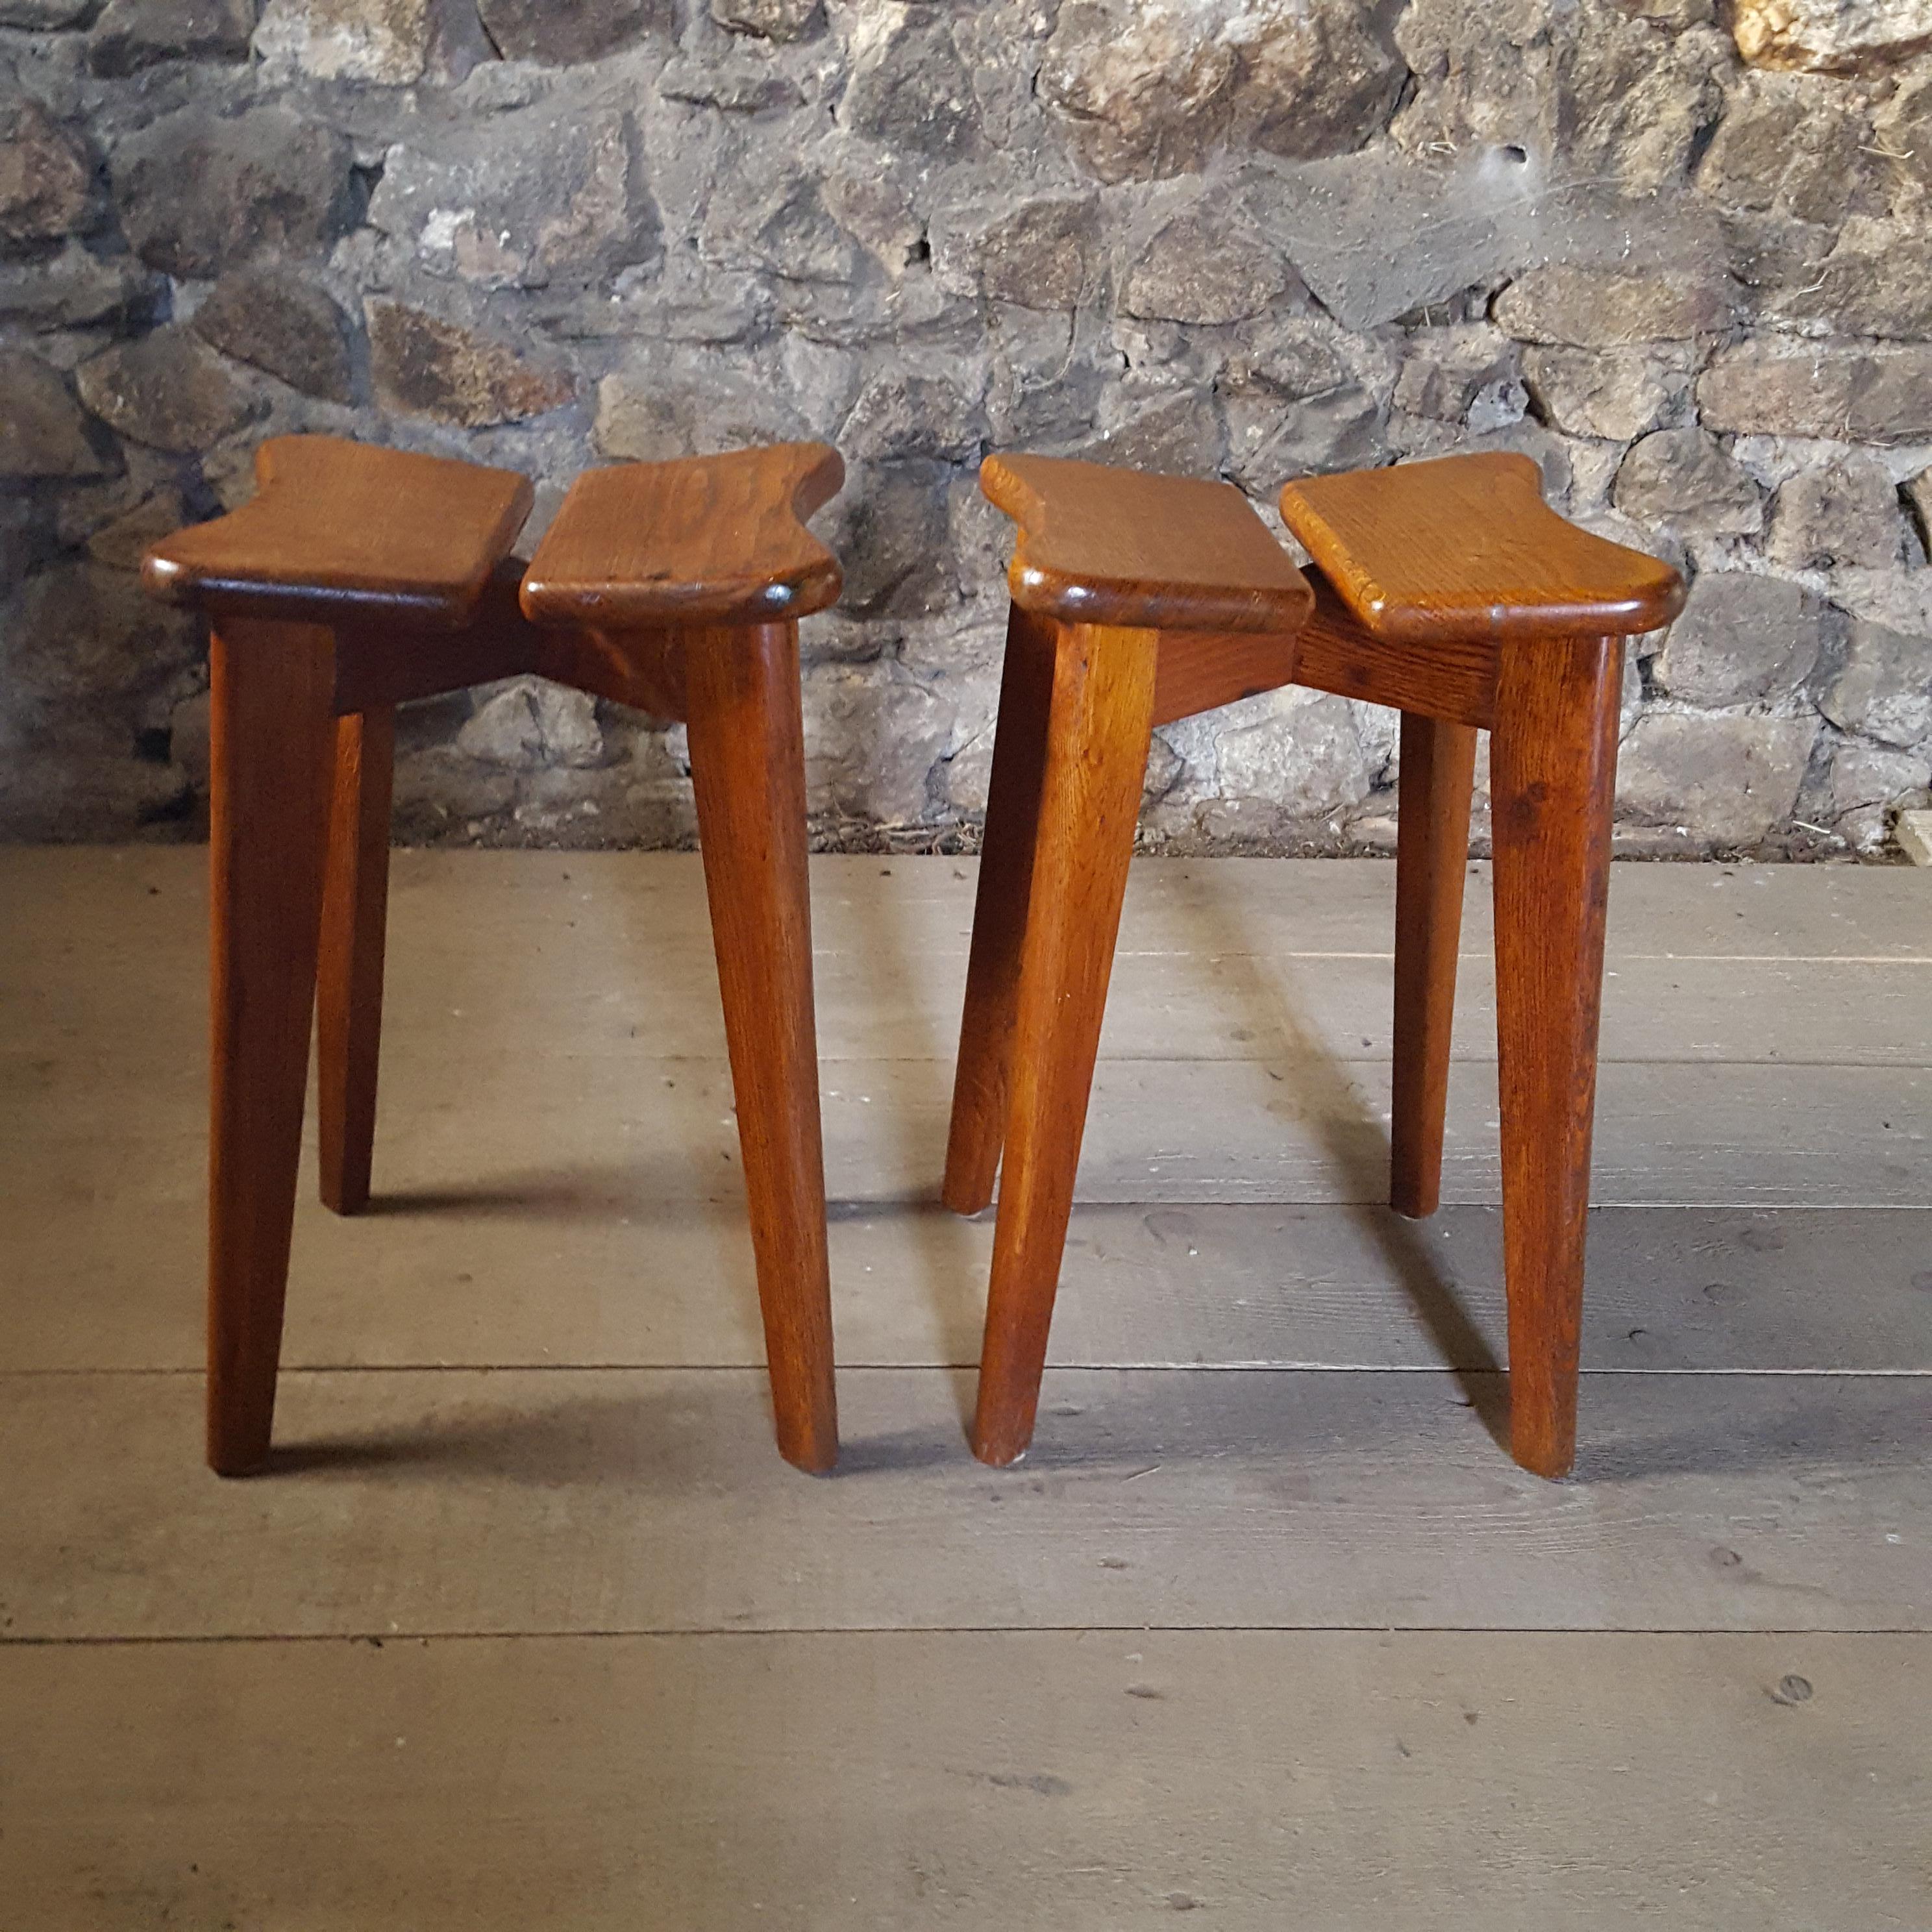 Set of 2 stools by French designer Marcel Gascoin.
Model 